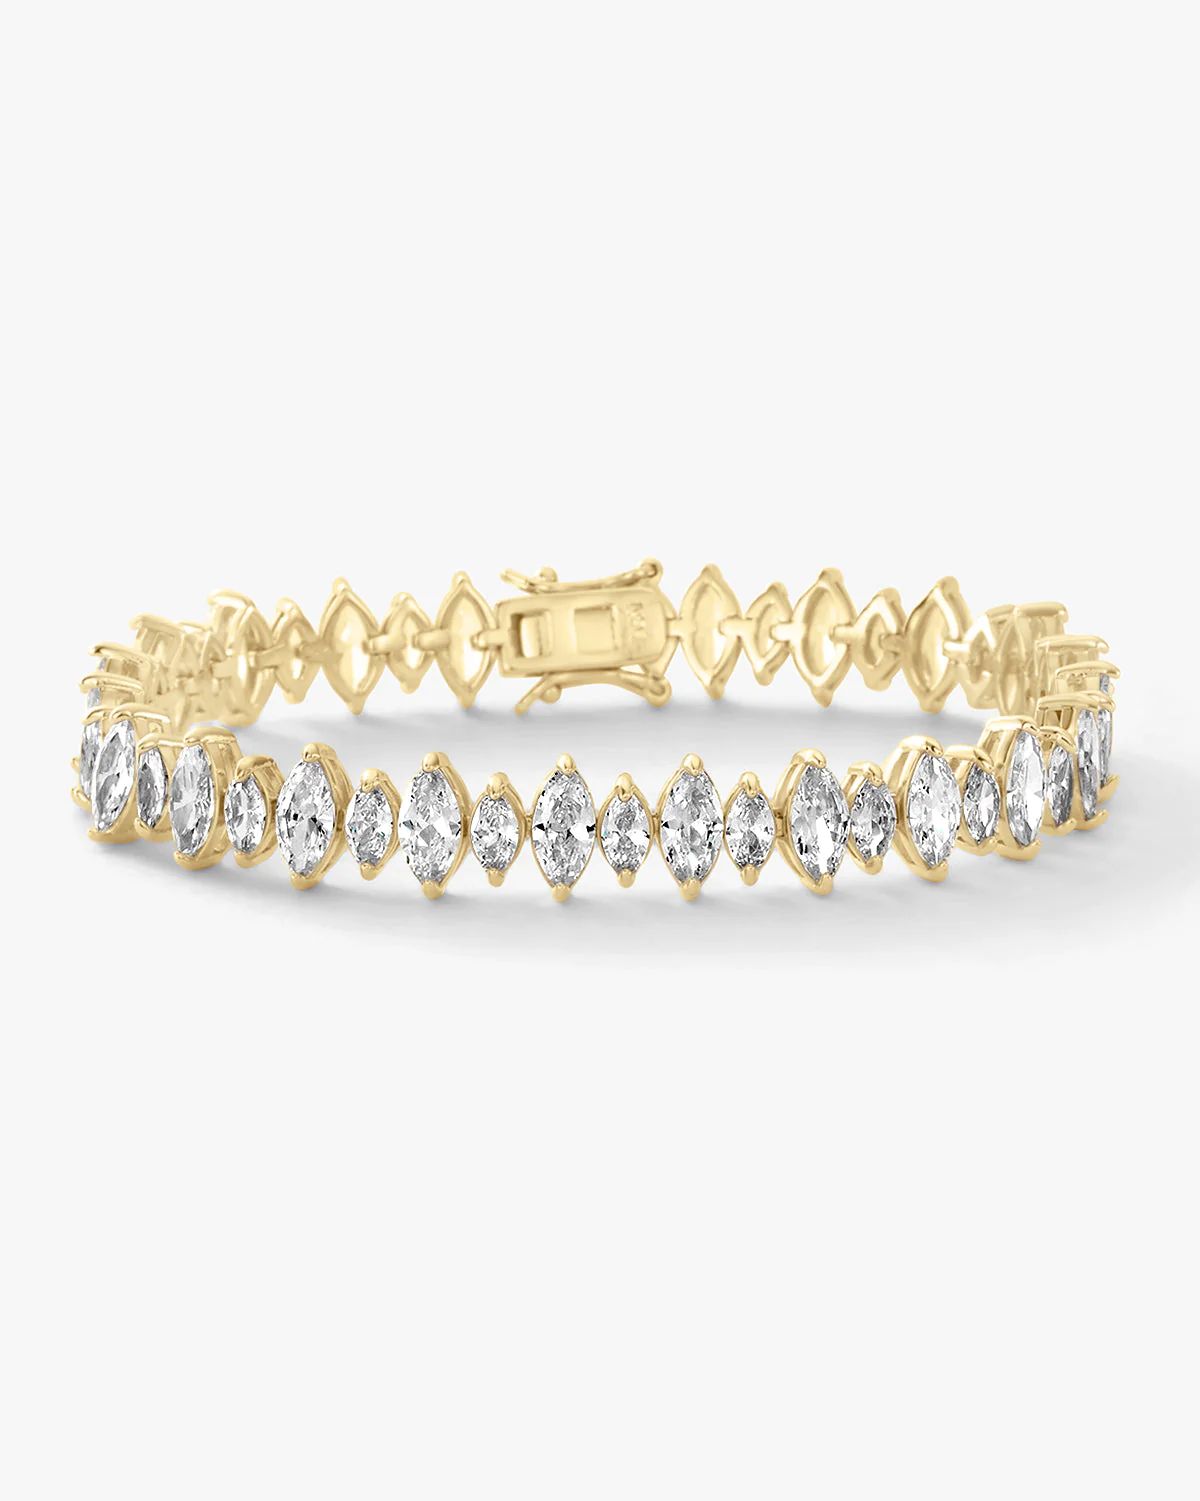 "She's So Fine" Bracelet - Gold|White Diamondettes | Melinda Maria